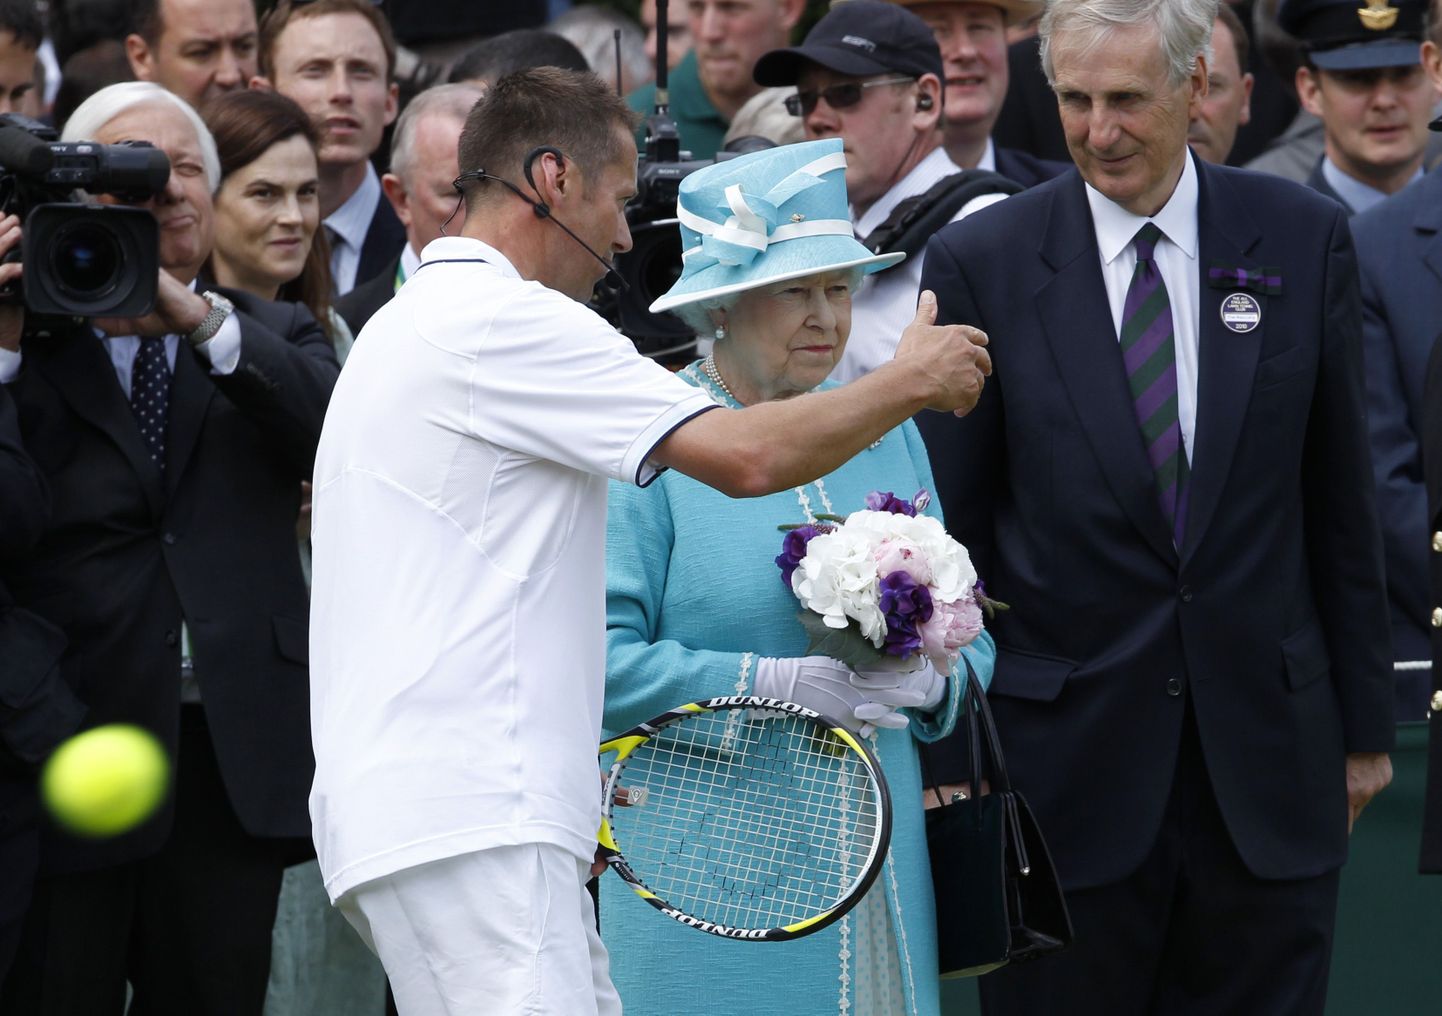 Kuninganna Elizabeth II Wimbledoni tenniseturniiril.